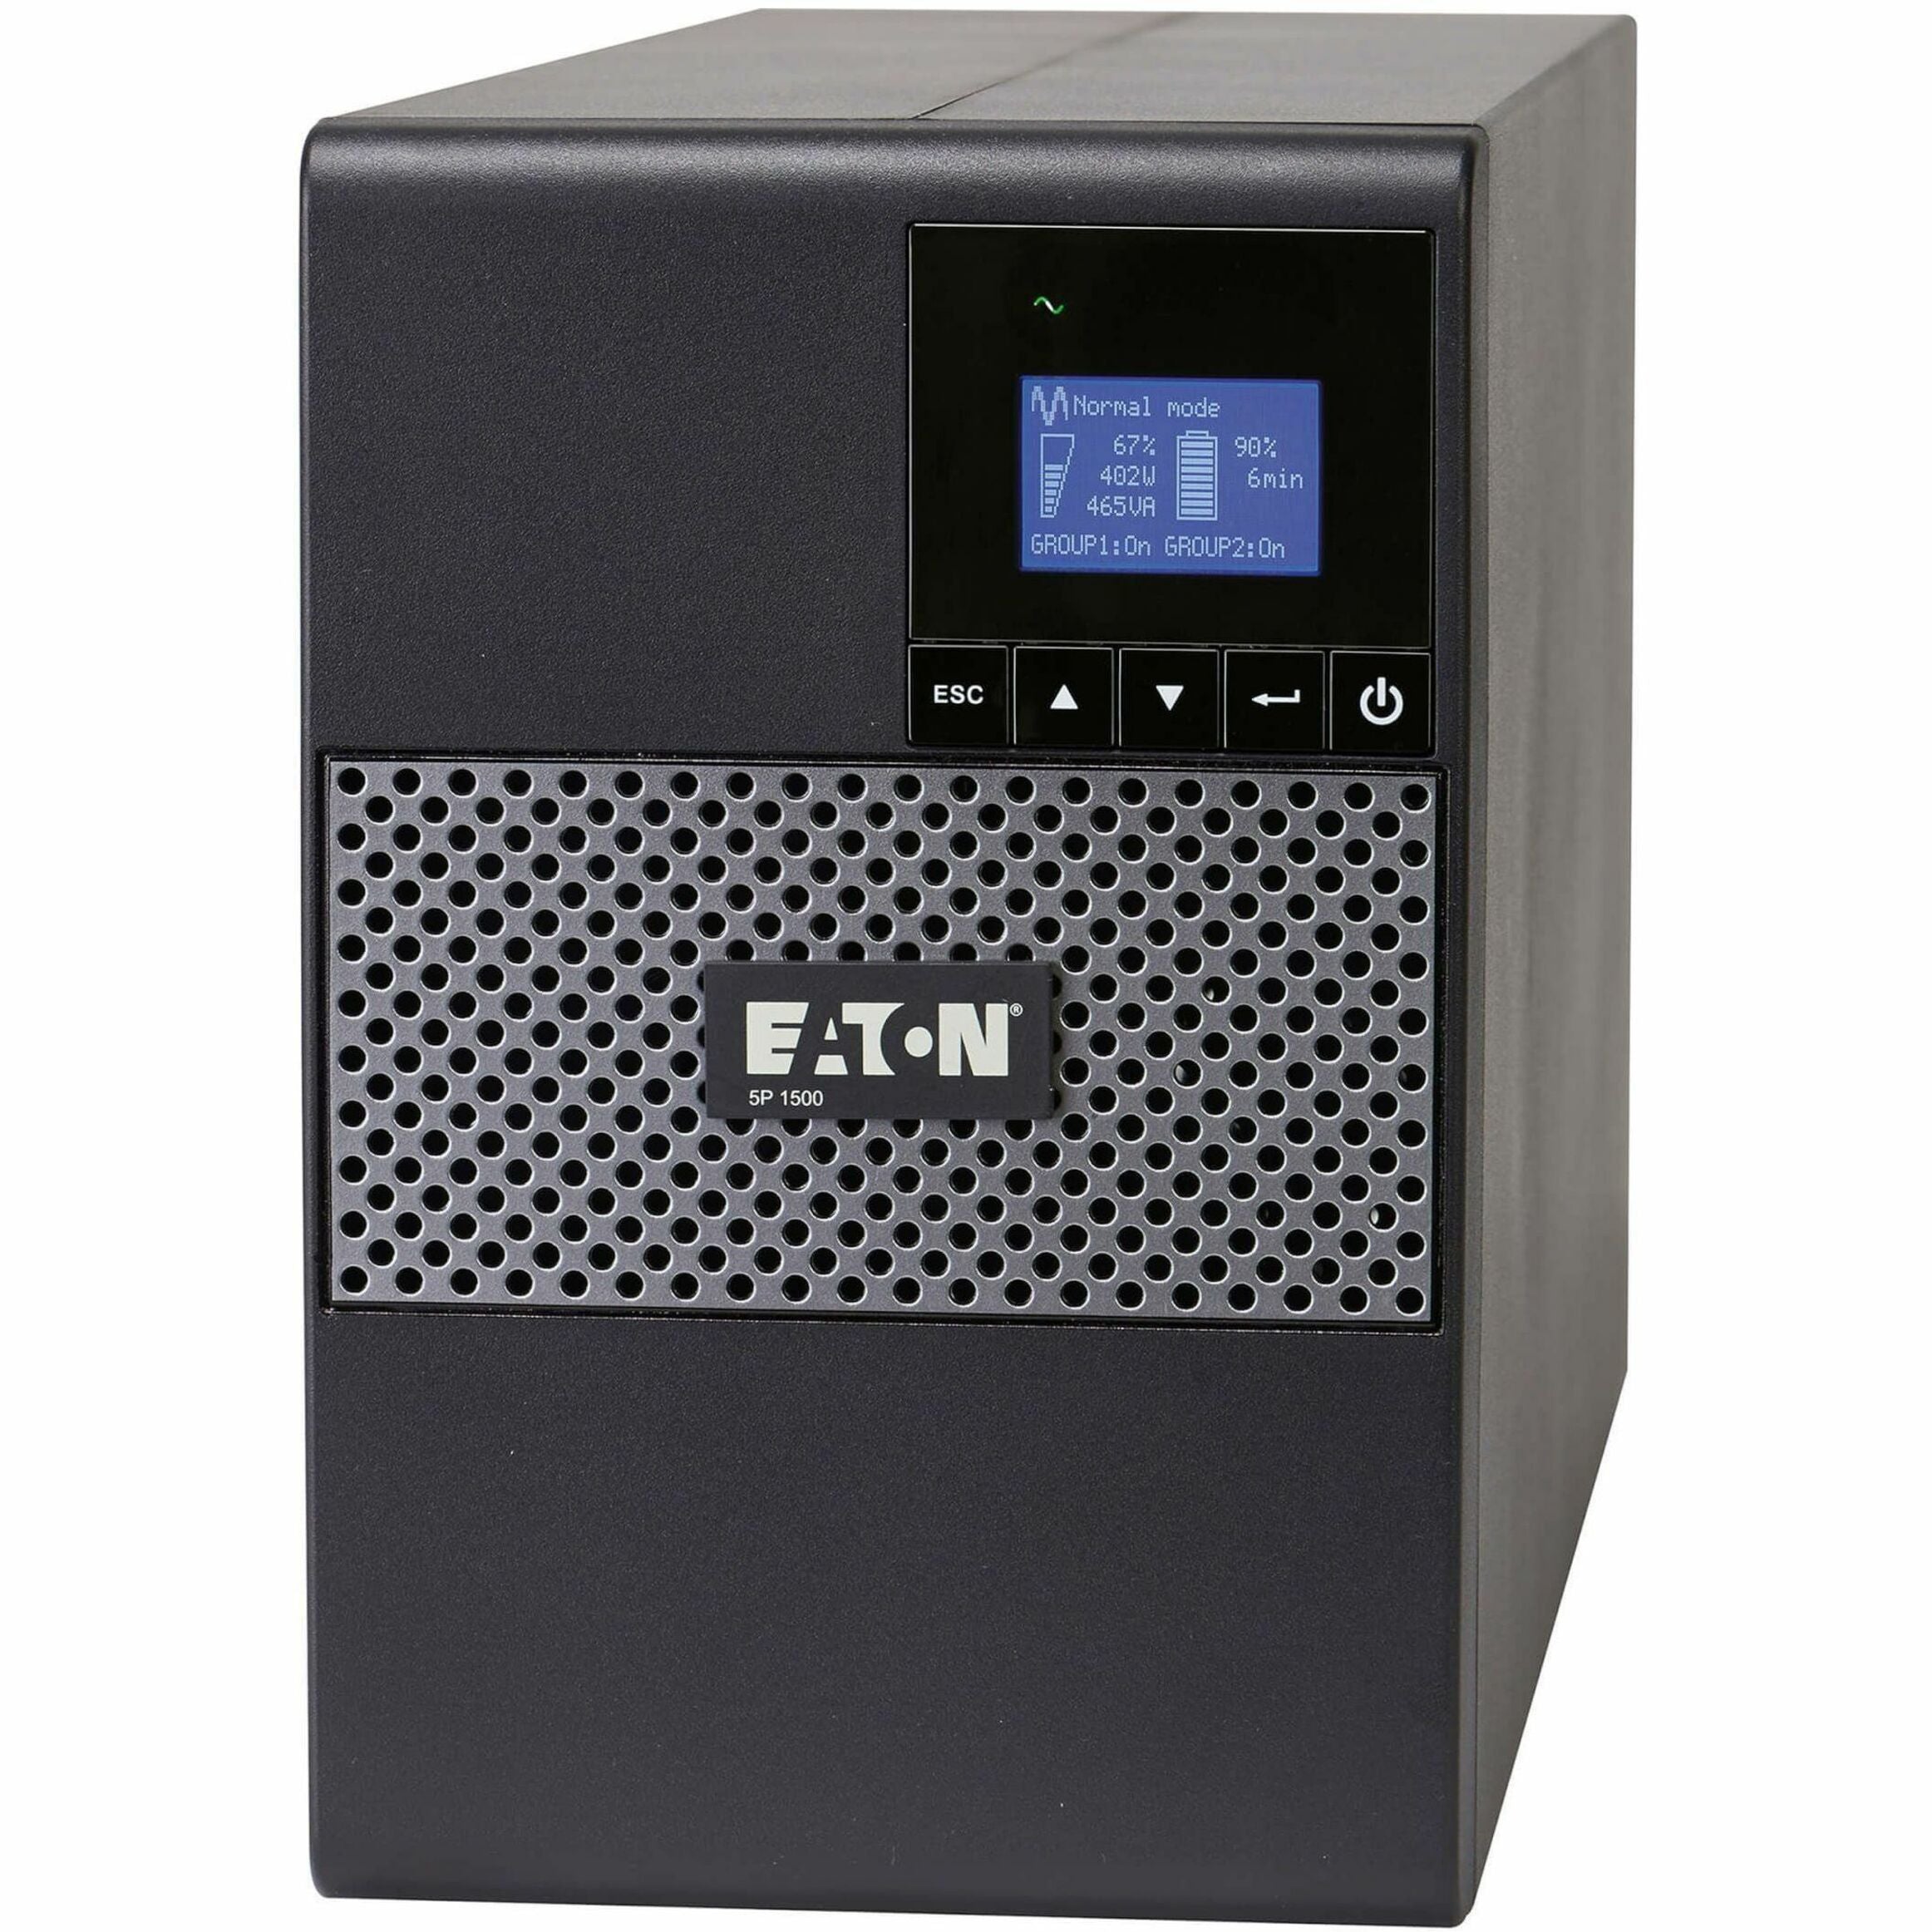 Eaton 5P 5P1500 1440VA 1100W Tower UPS, Cybersecure Network Card Option, True Sine Wave